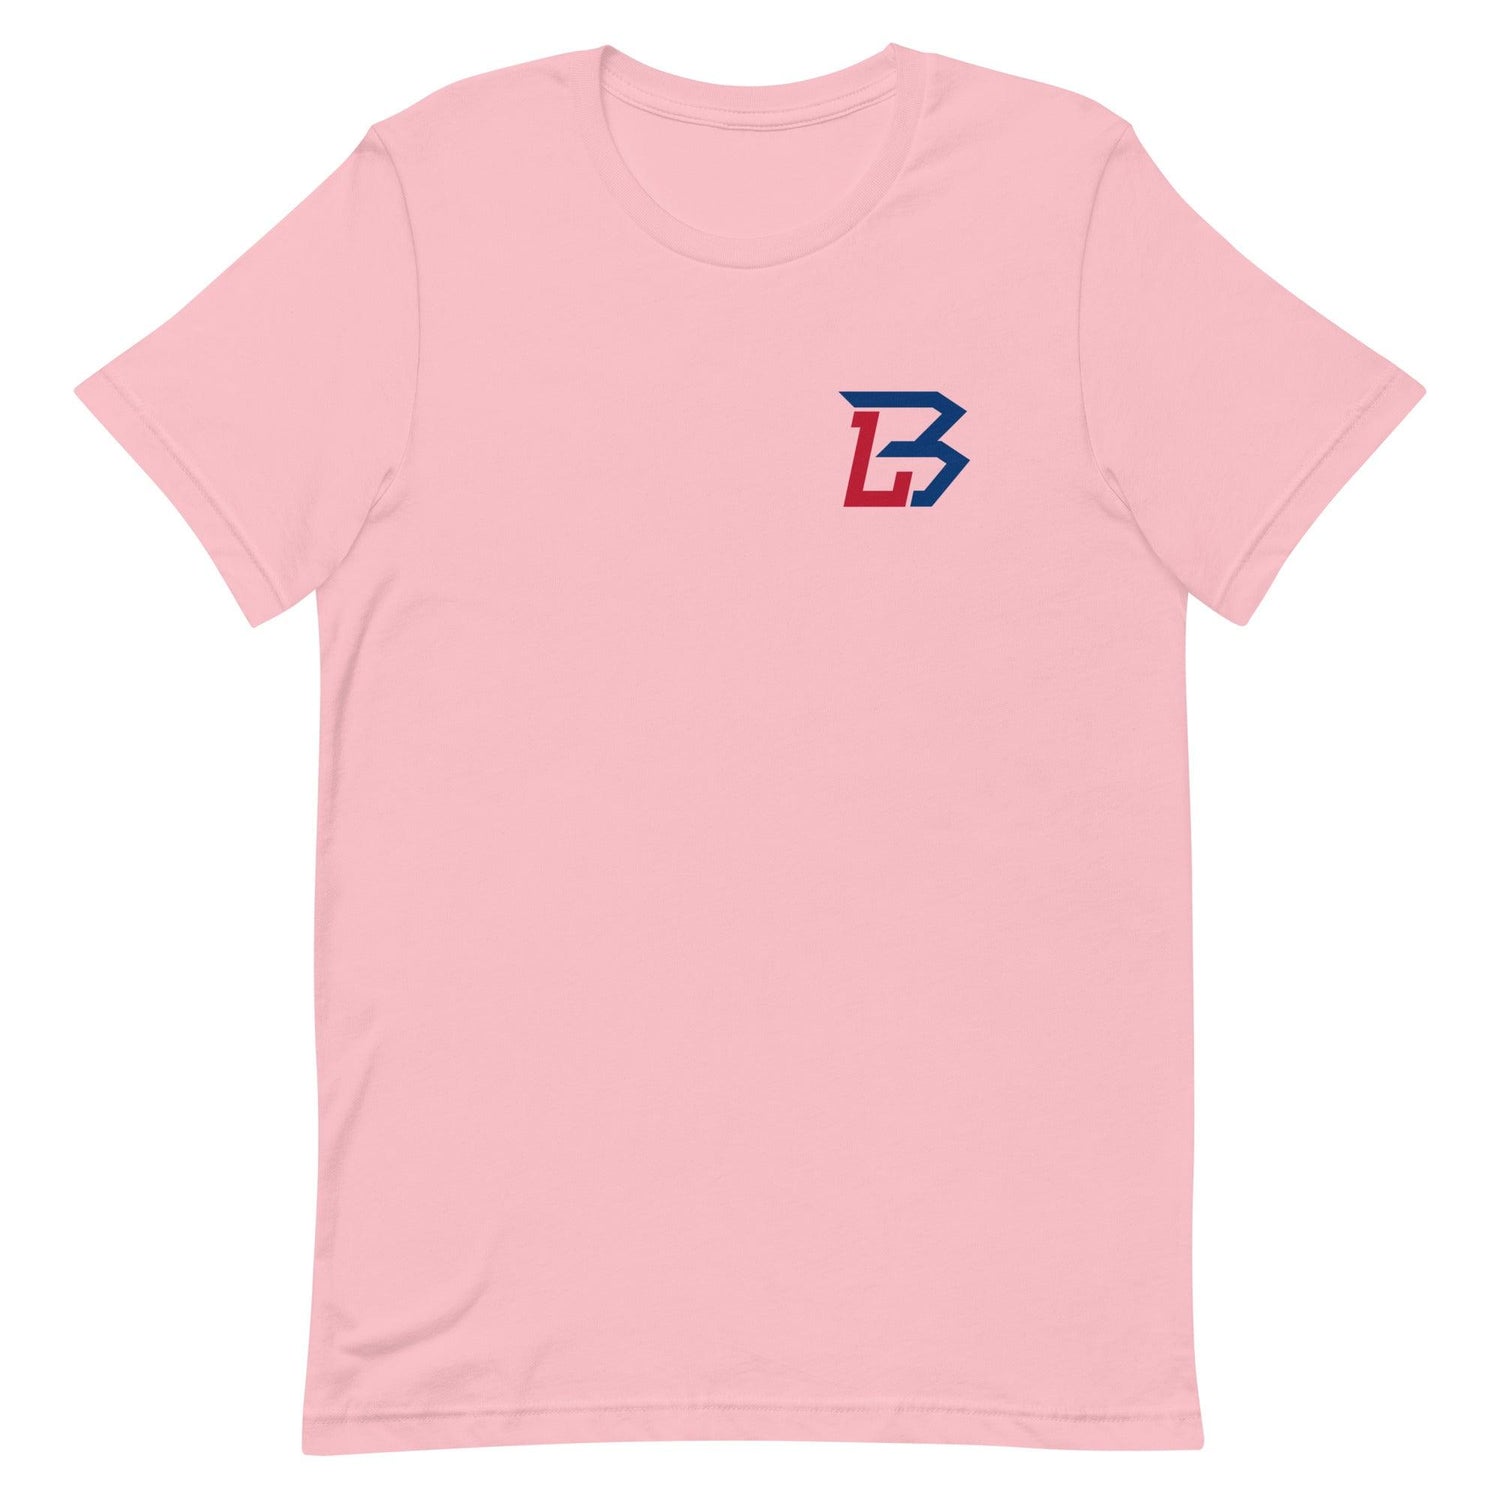 Brendon Little "Essential" t-shirt - Fan Arch